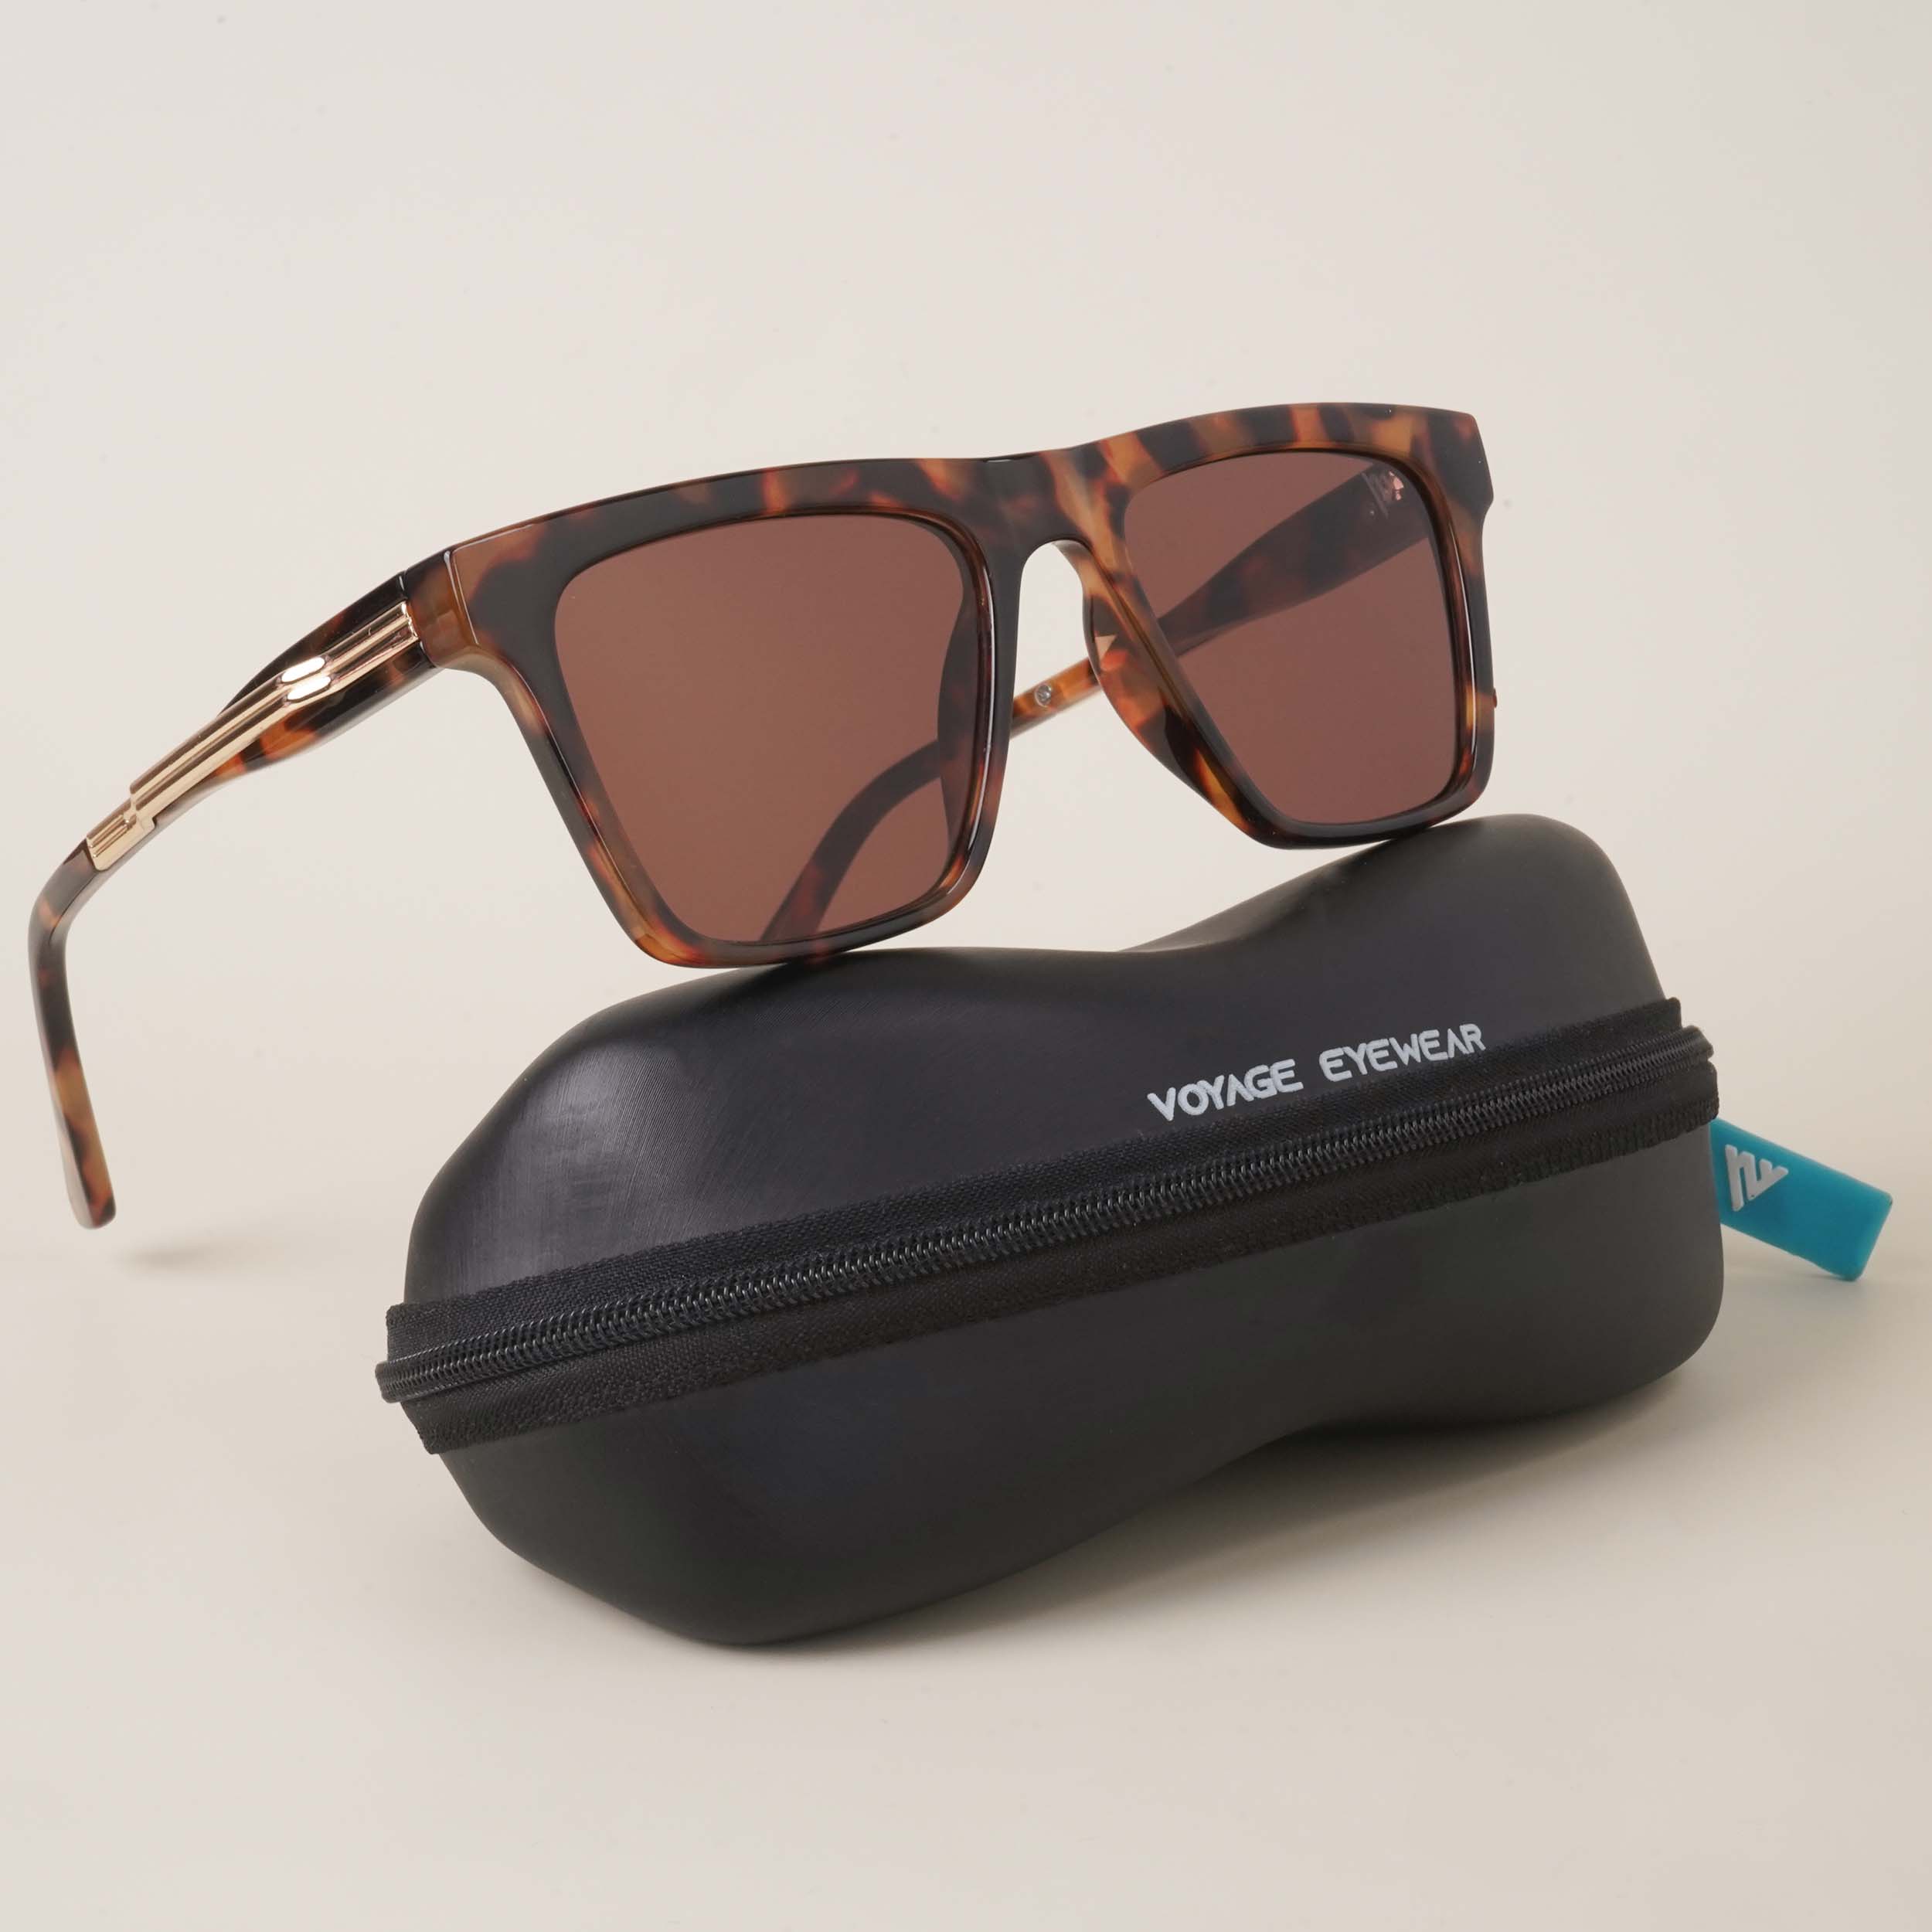 Voyage Brown Wayfarer Sunglasses - MG3914